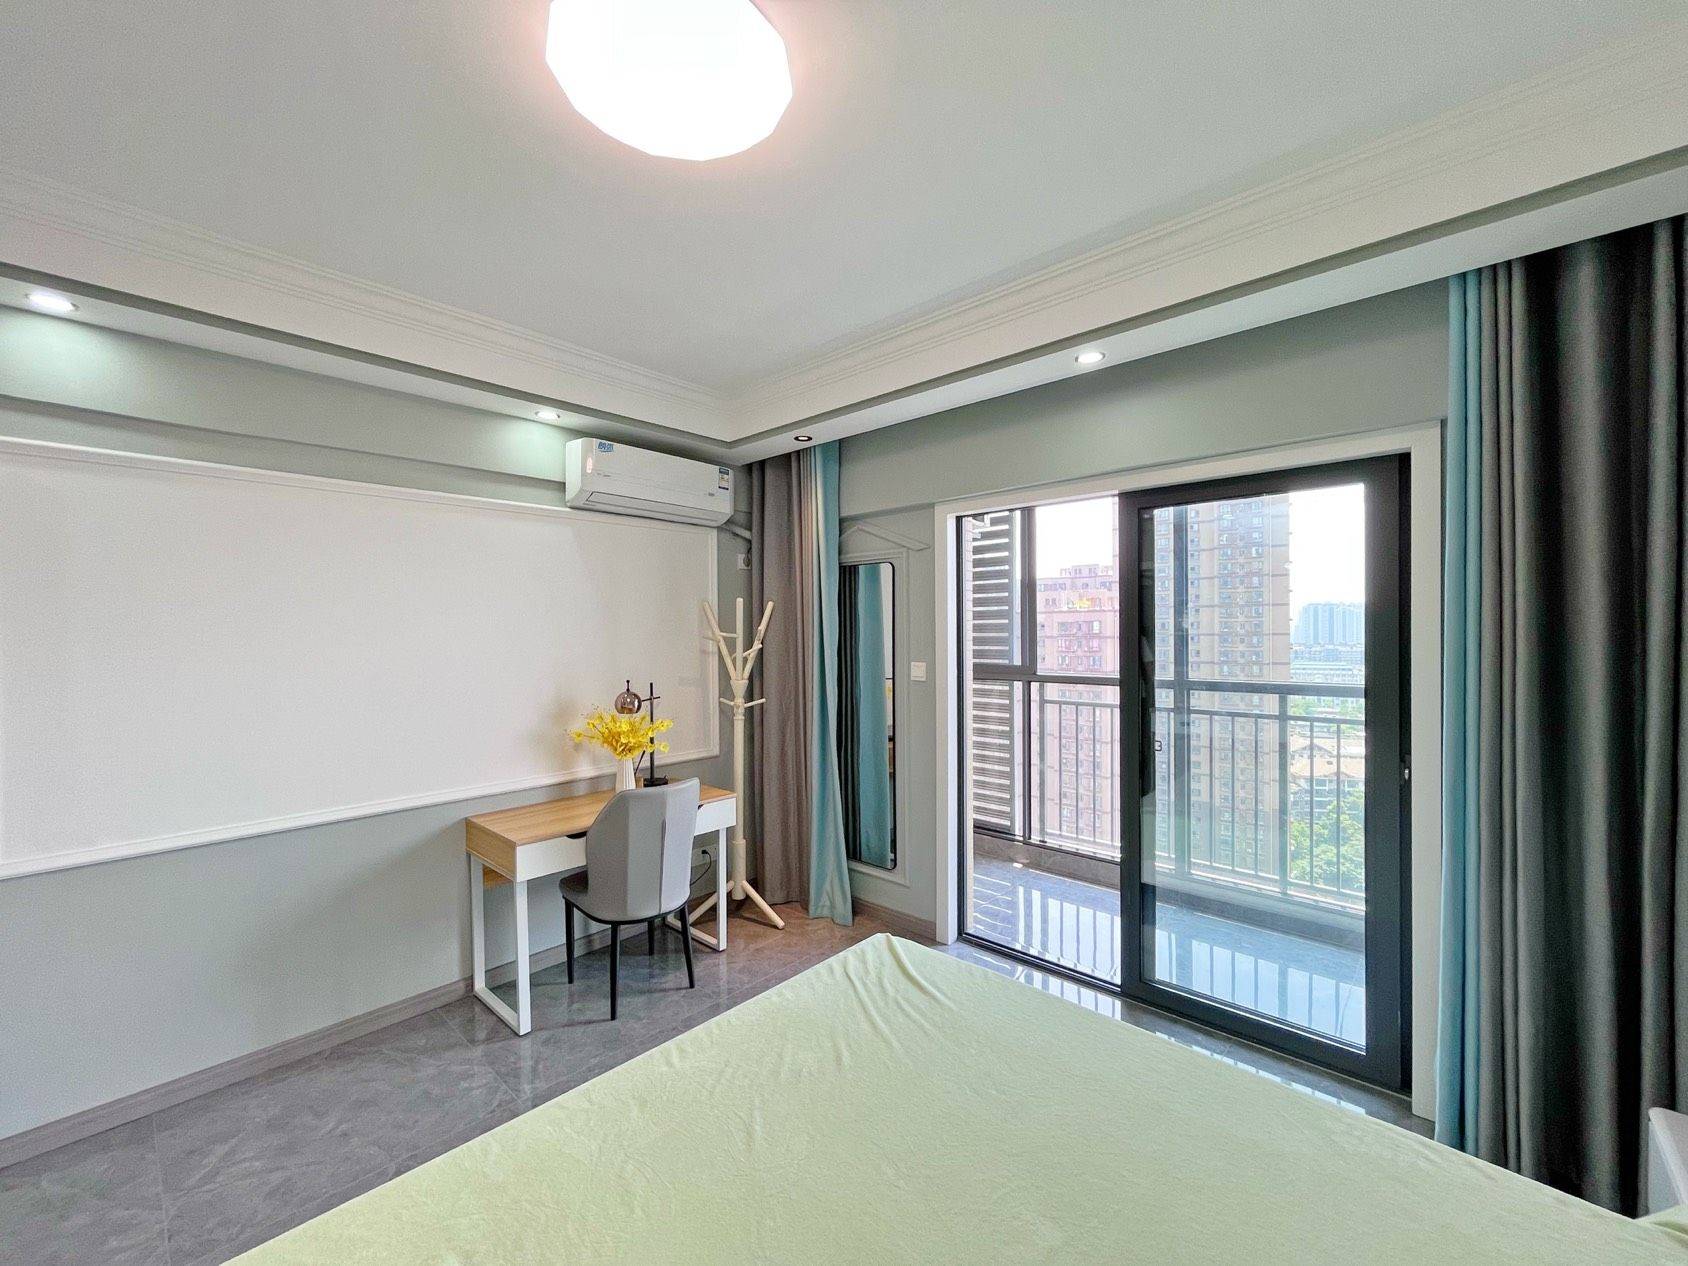 Wuhan-Hongshan-Shared Apartment,Sublet,Seeking Flatmate,Long & Short Term